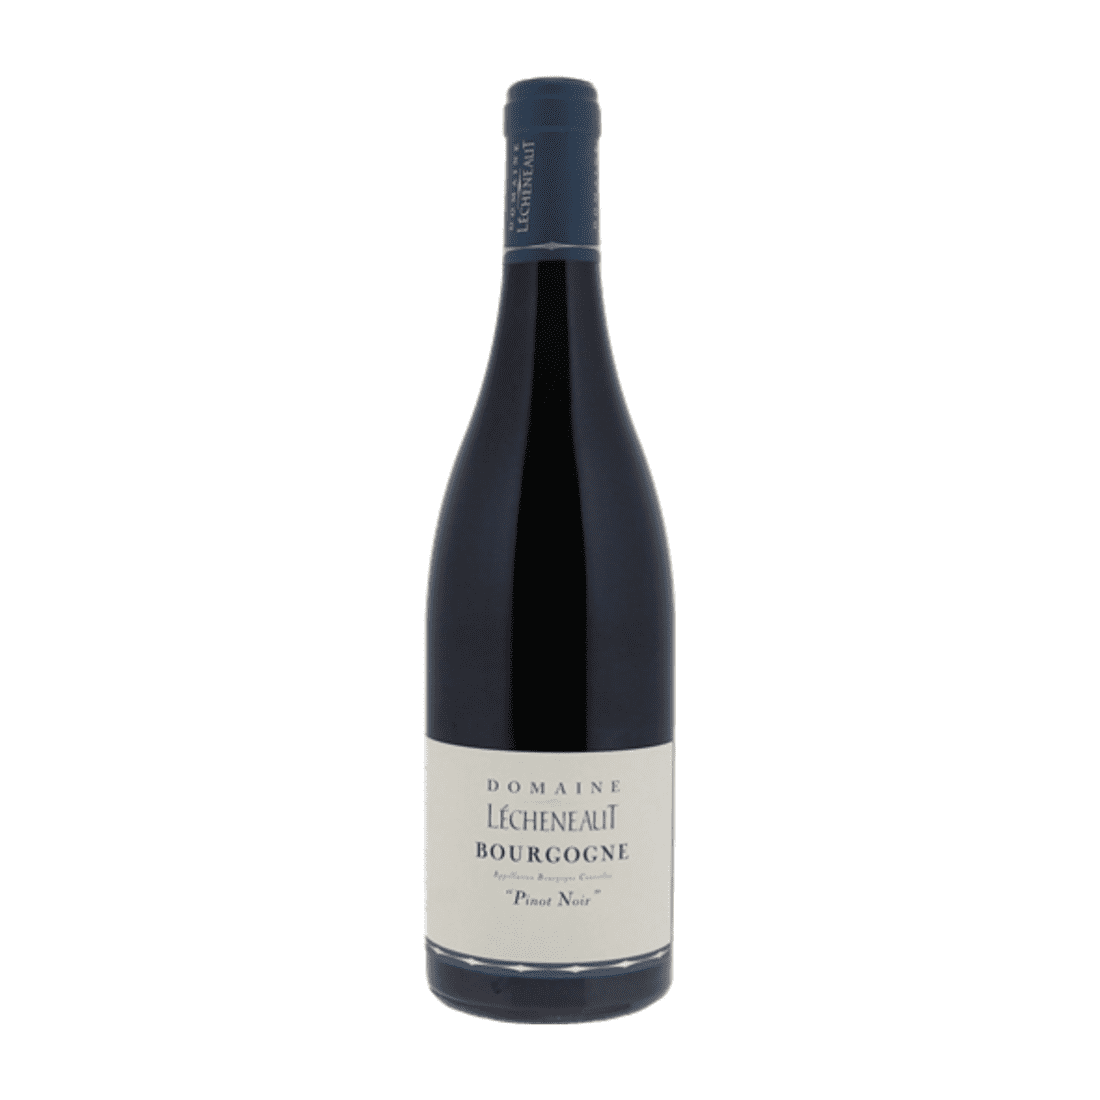 Domaine Lecheneaut, Bourgogne, Pinot Noir